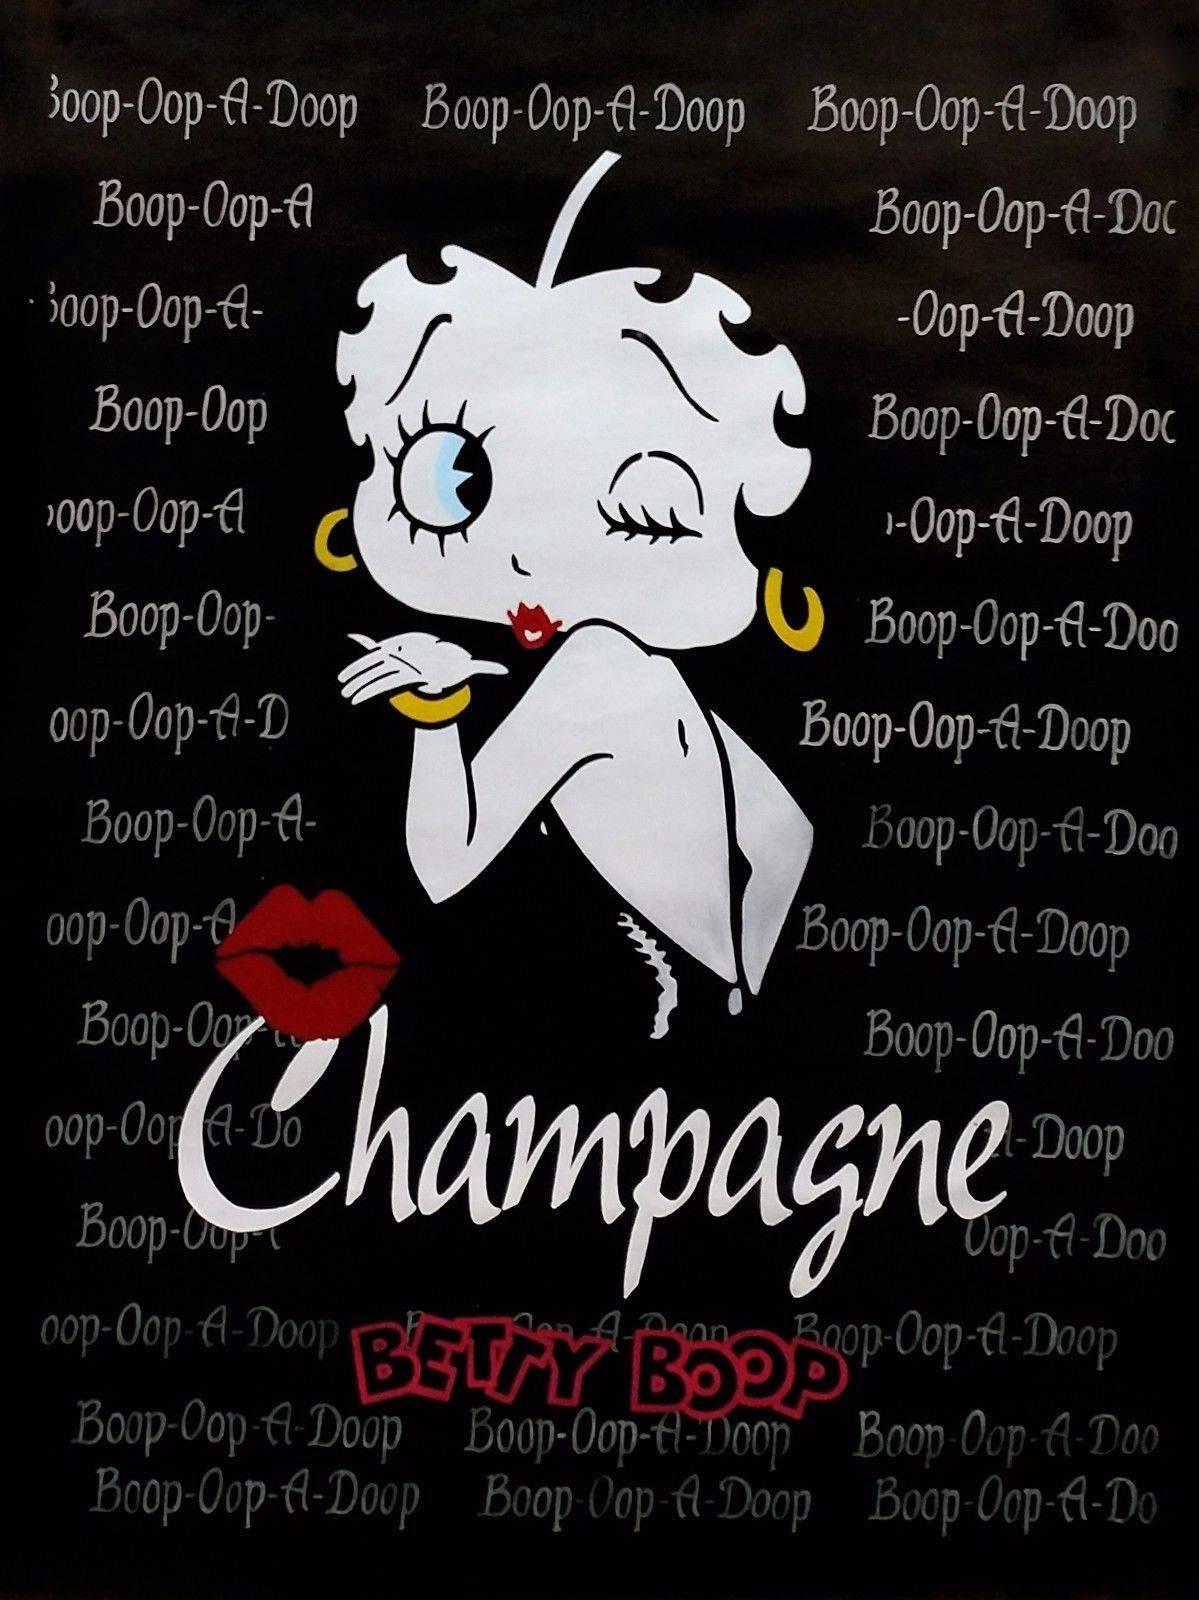 BETTY BOOB - CHAMPAGNE